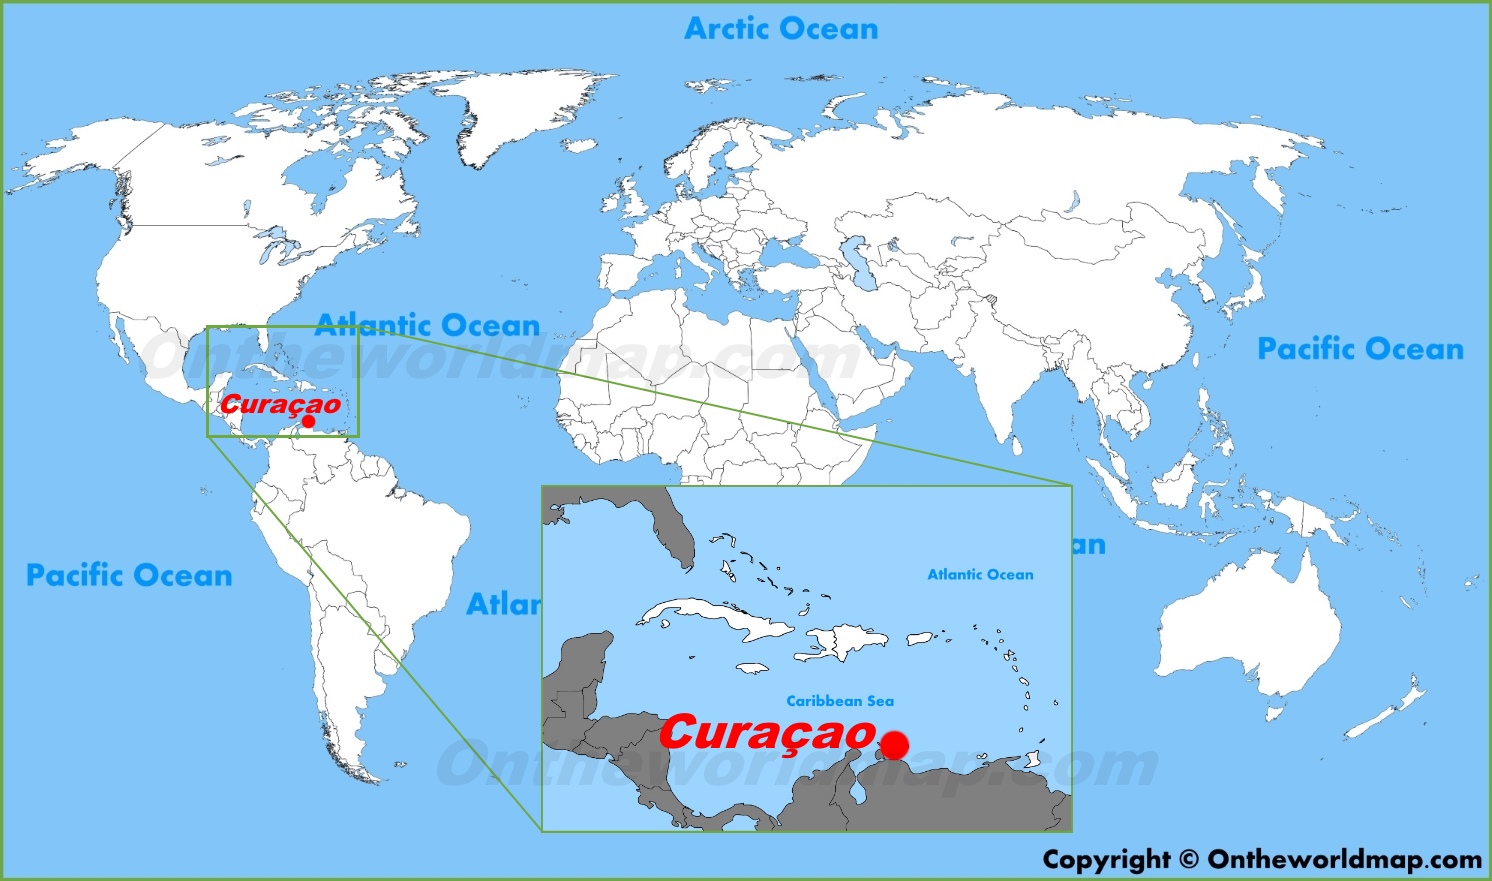 curacao location on world map Curacao Location On The World Map curacao location on world map